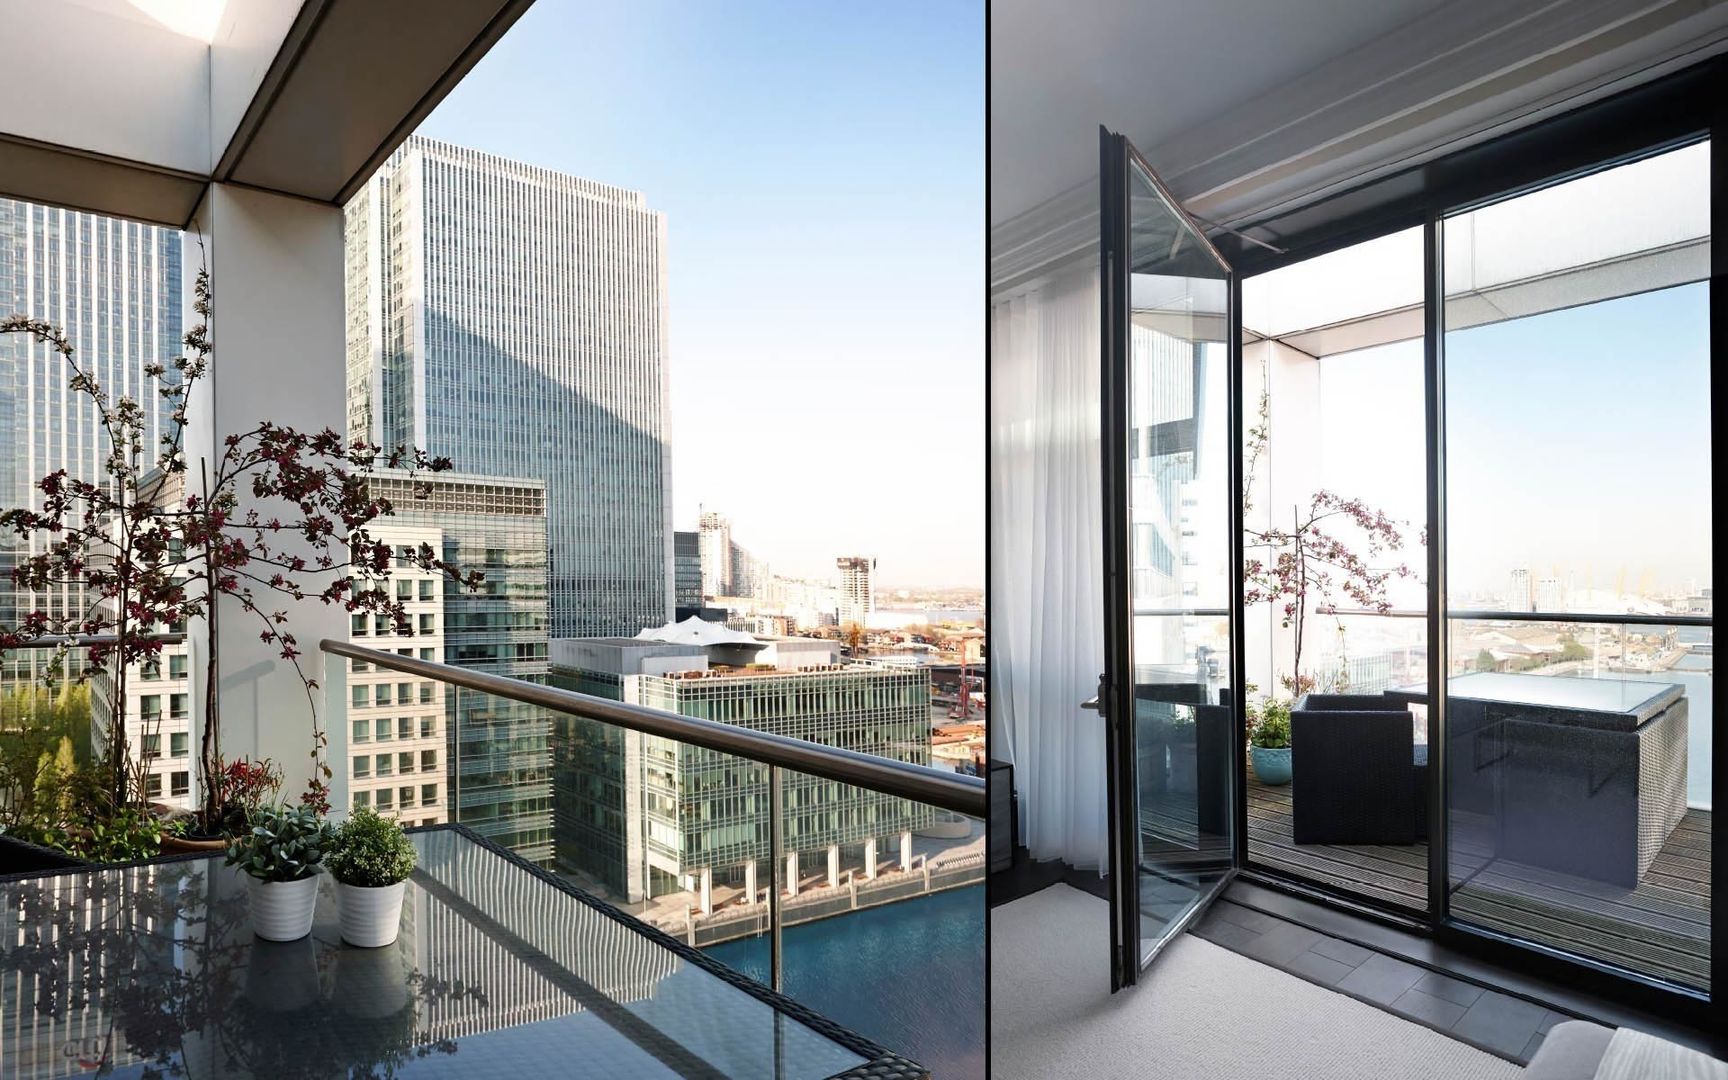 Luxury Penthouse Apartment: Discovery Dock, Boscolo Boscolo 모던스타일 발코니, 베란다 & 테라스 액세서리 & 장식